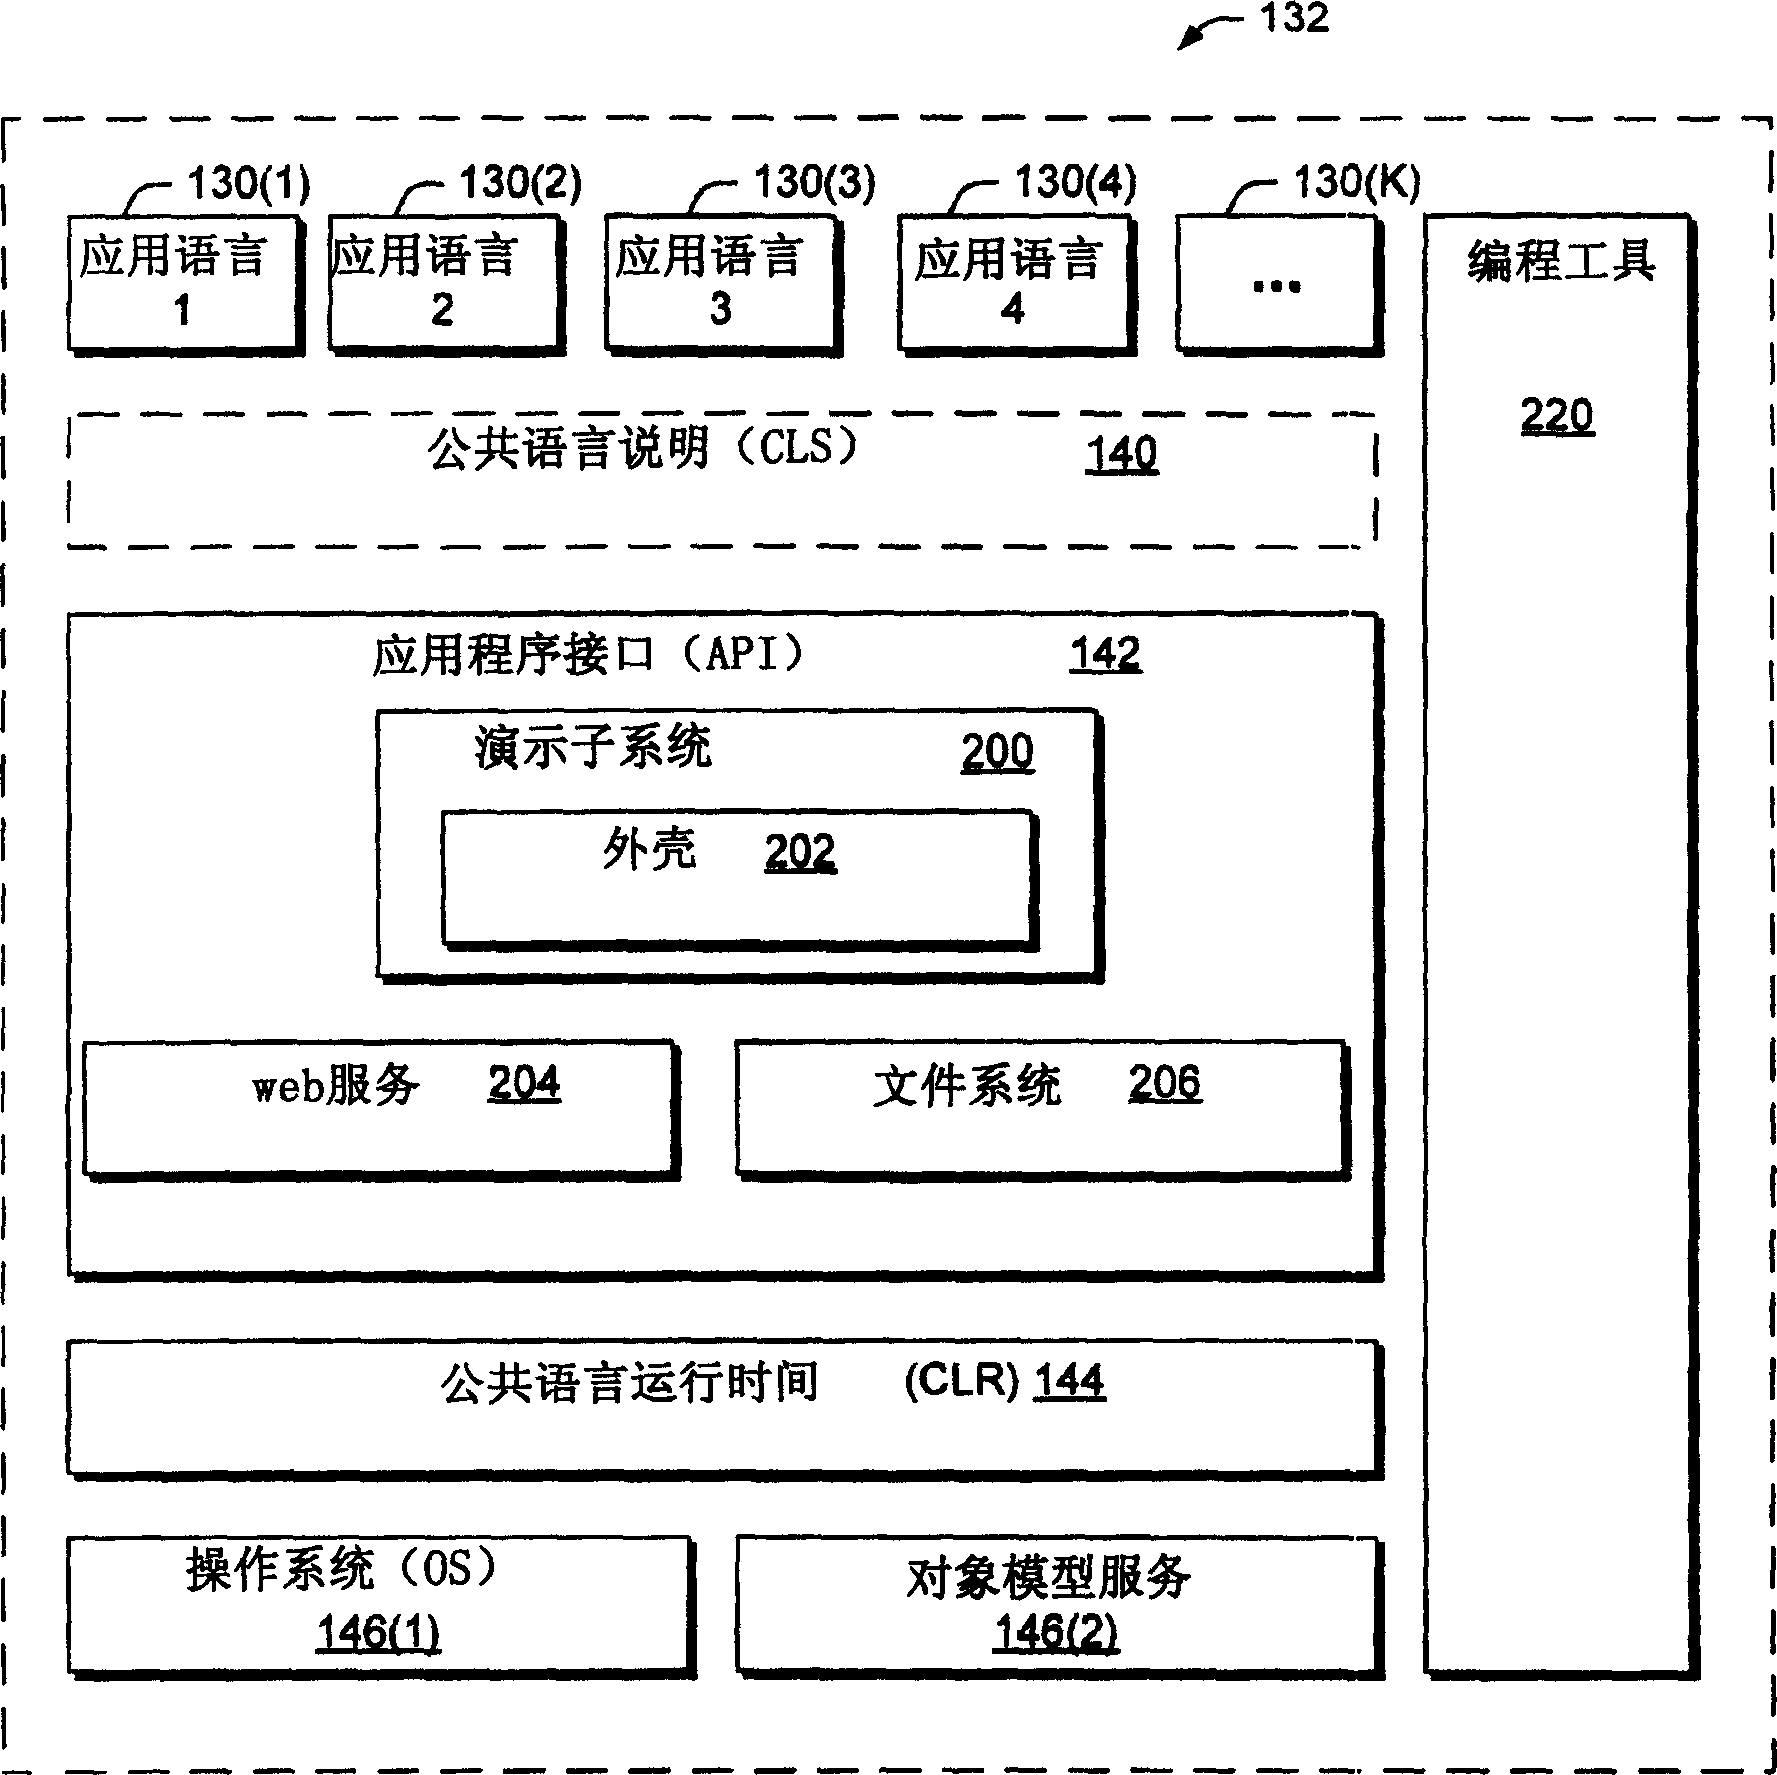 Programming interface for a computer platform